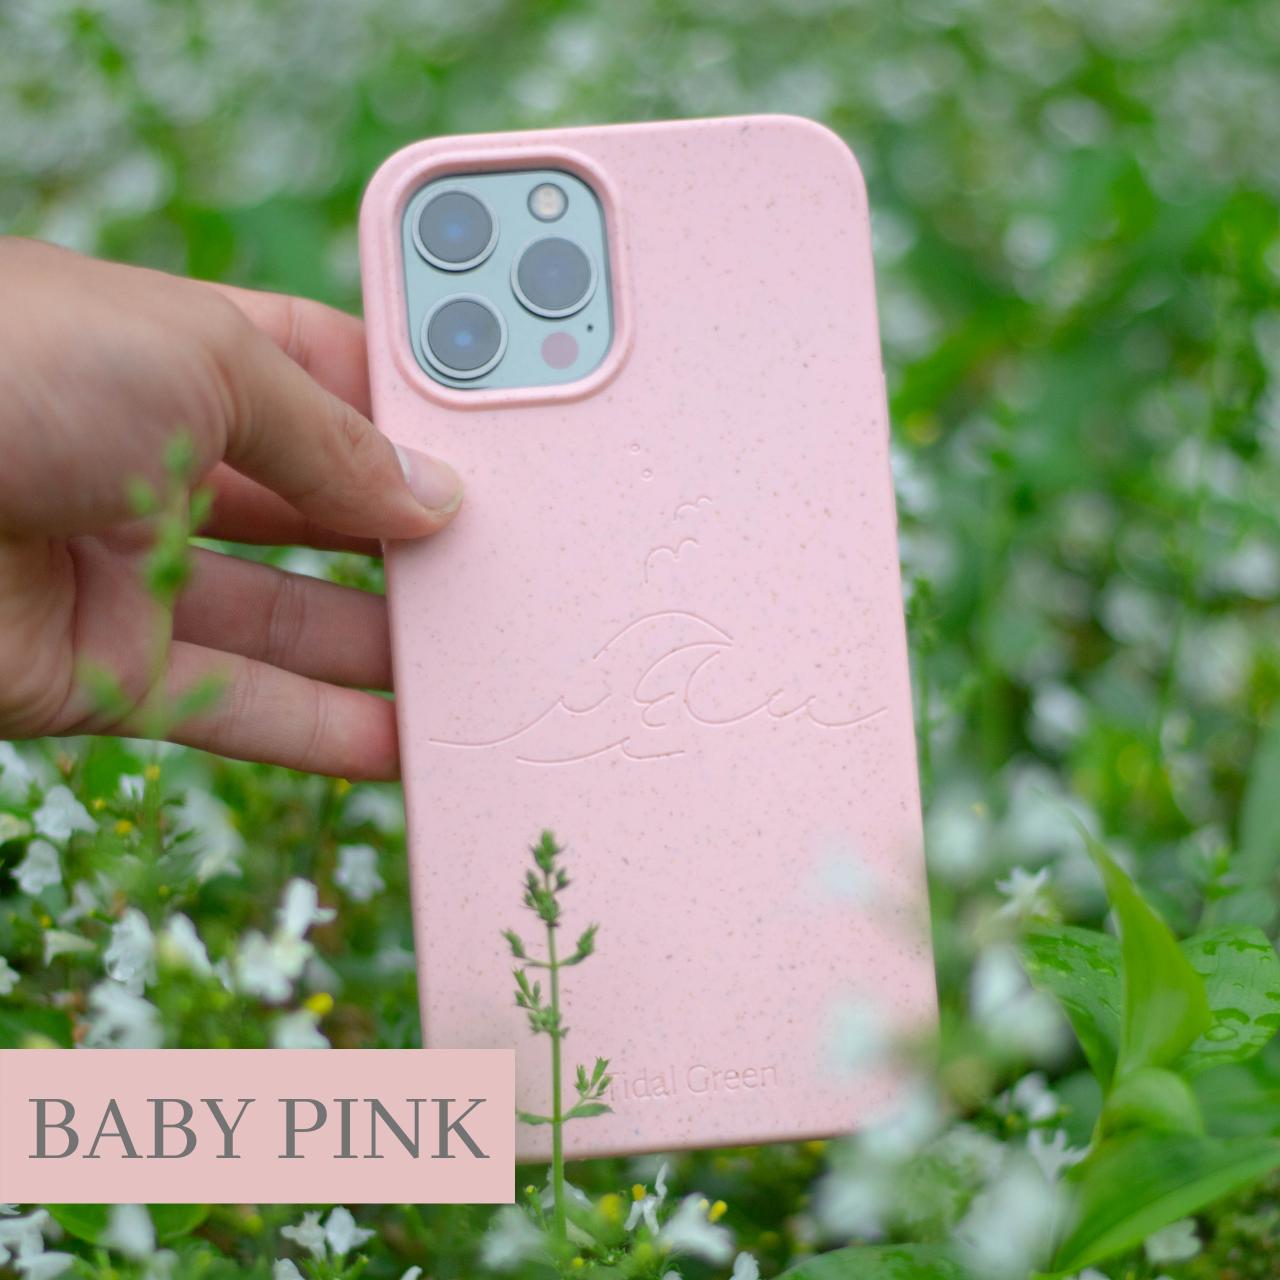 ever straight: baby pink オーガニックな優しいピンク – Tidal Green